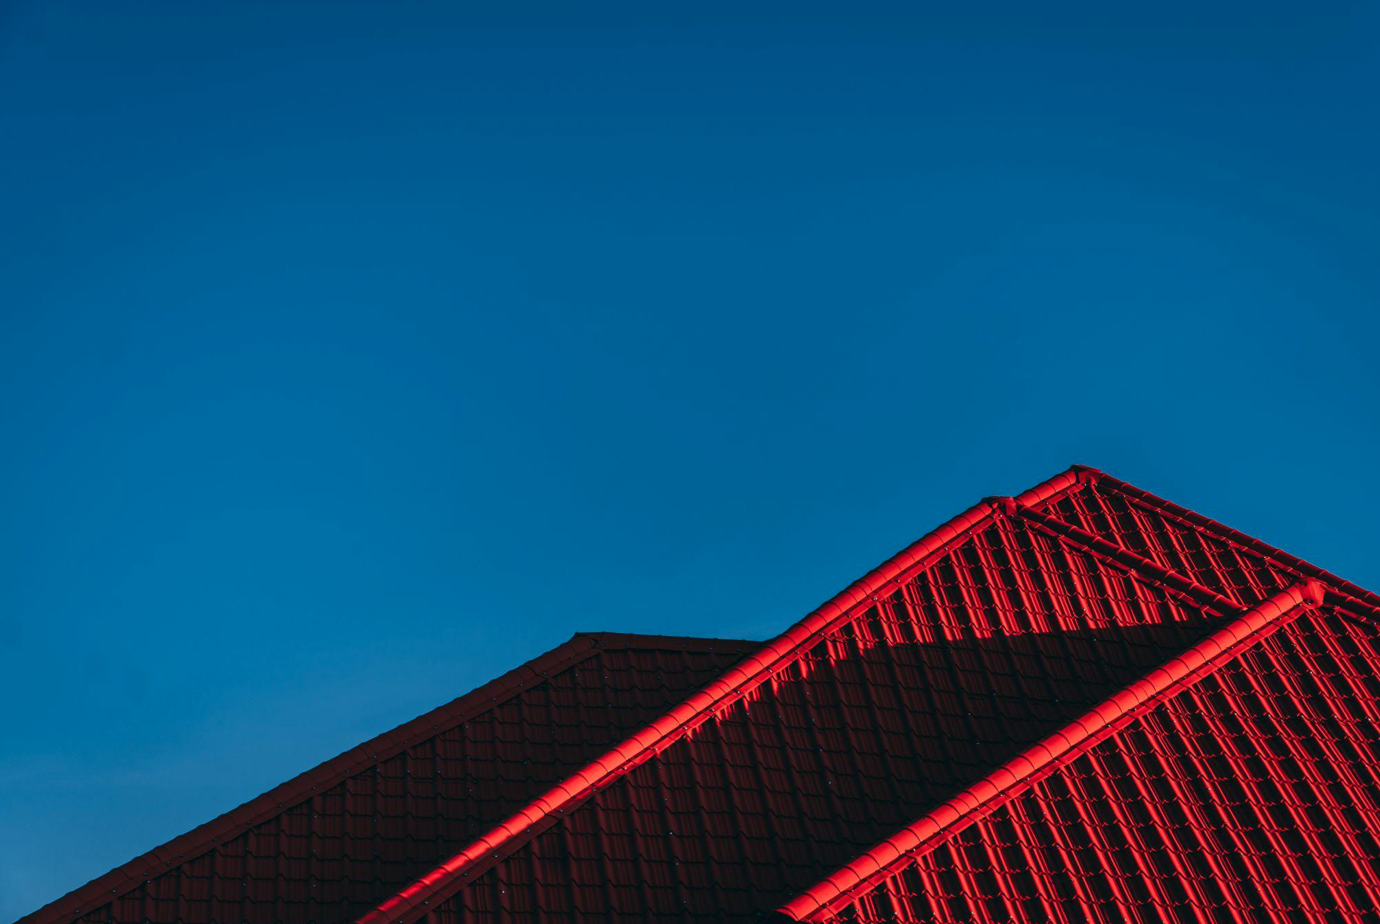 Deep red roof against a blue sky; image by Robin Kutesa, via Unsplash.com.